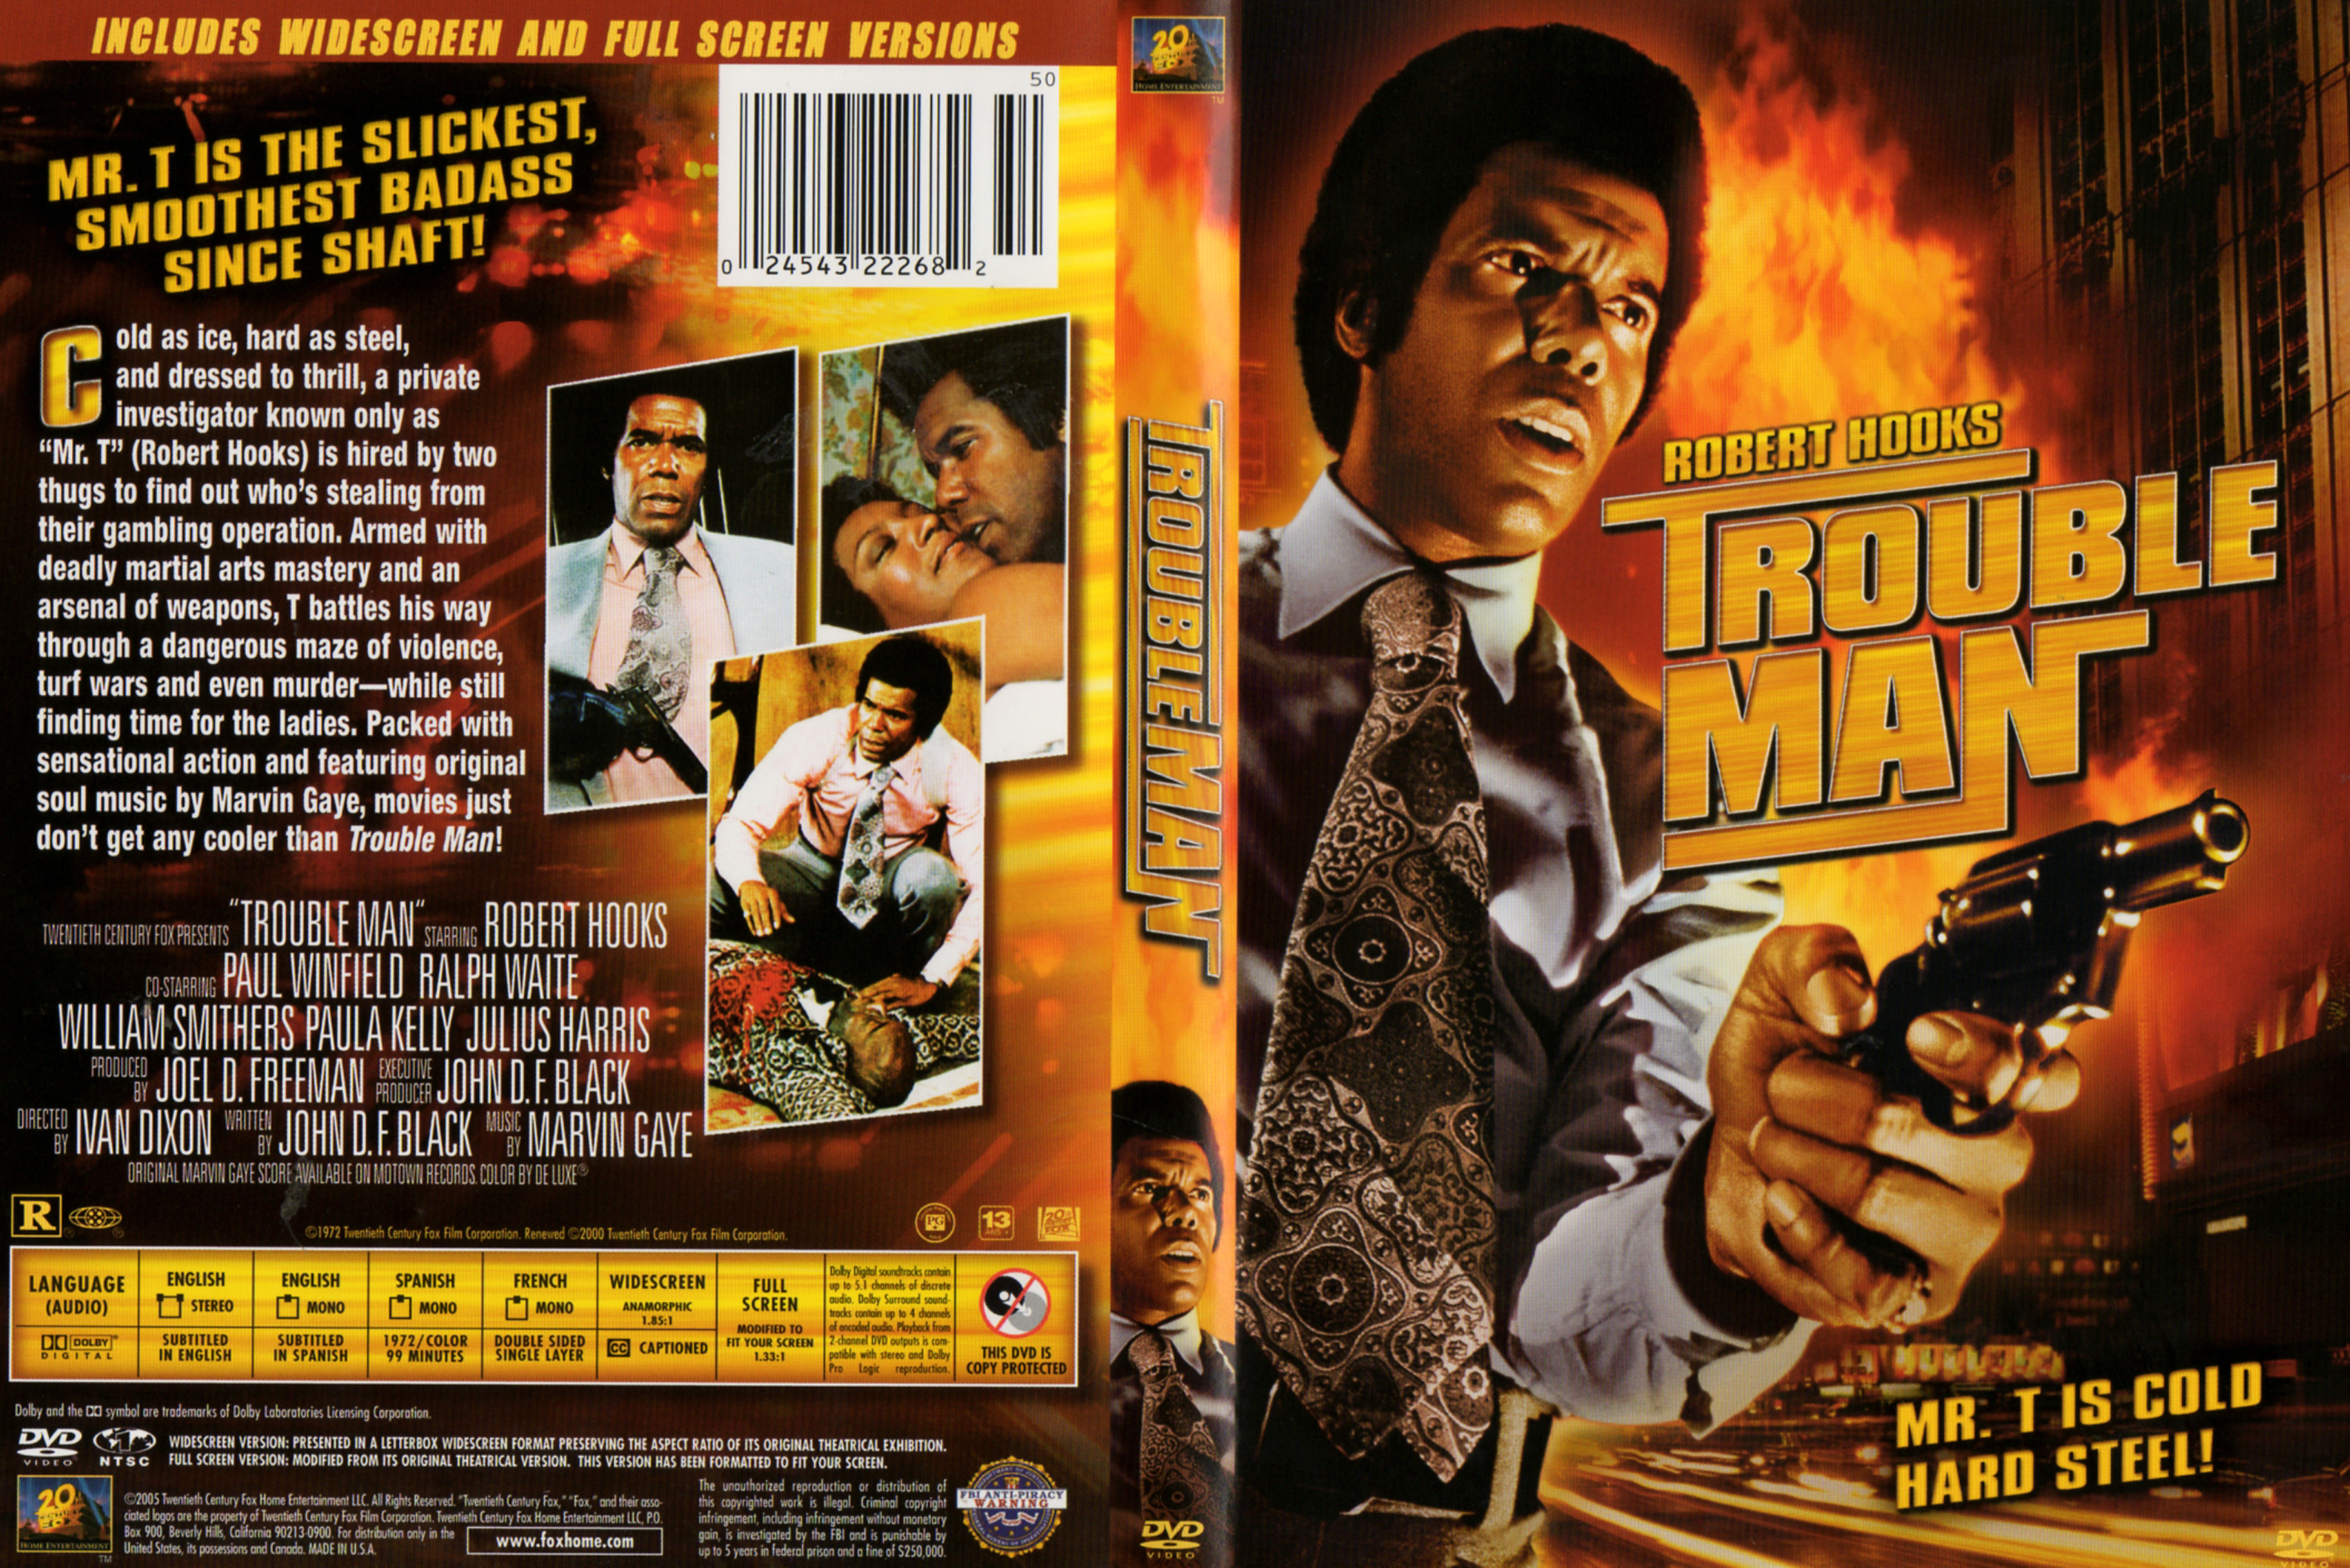 Jaquette DVD Trouble man Zone 1